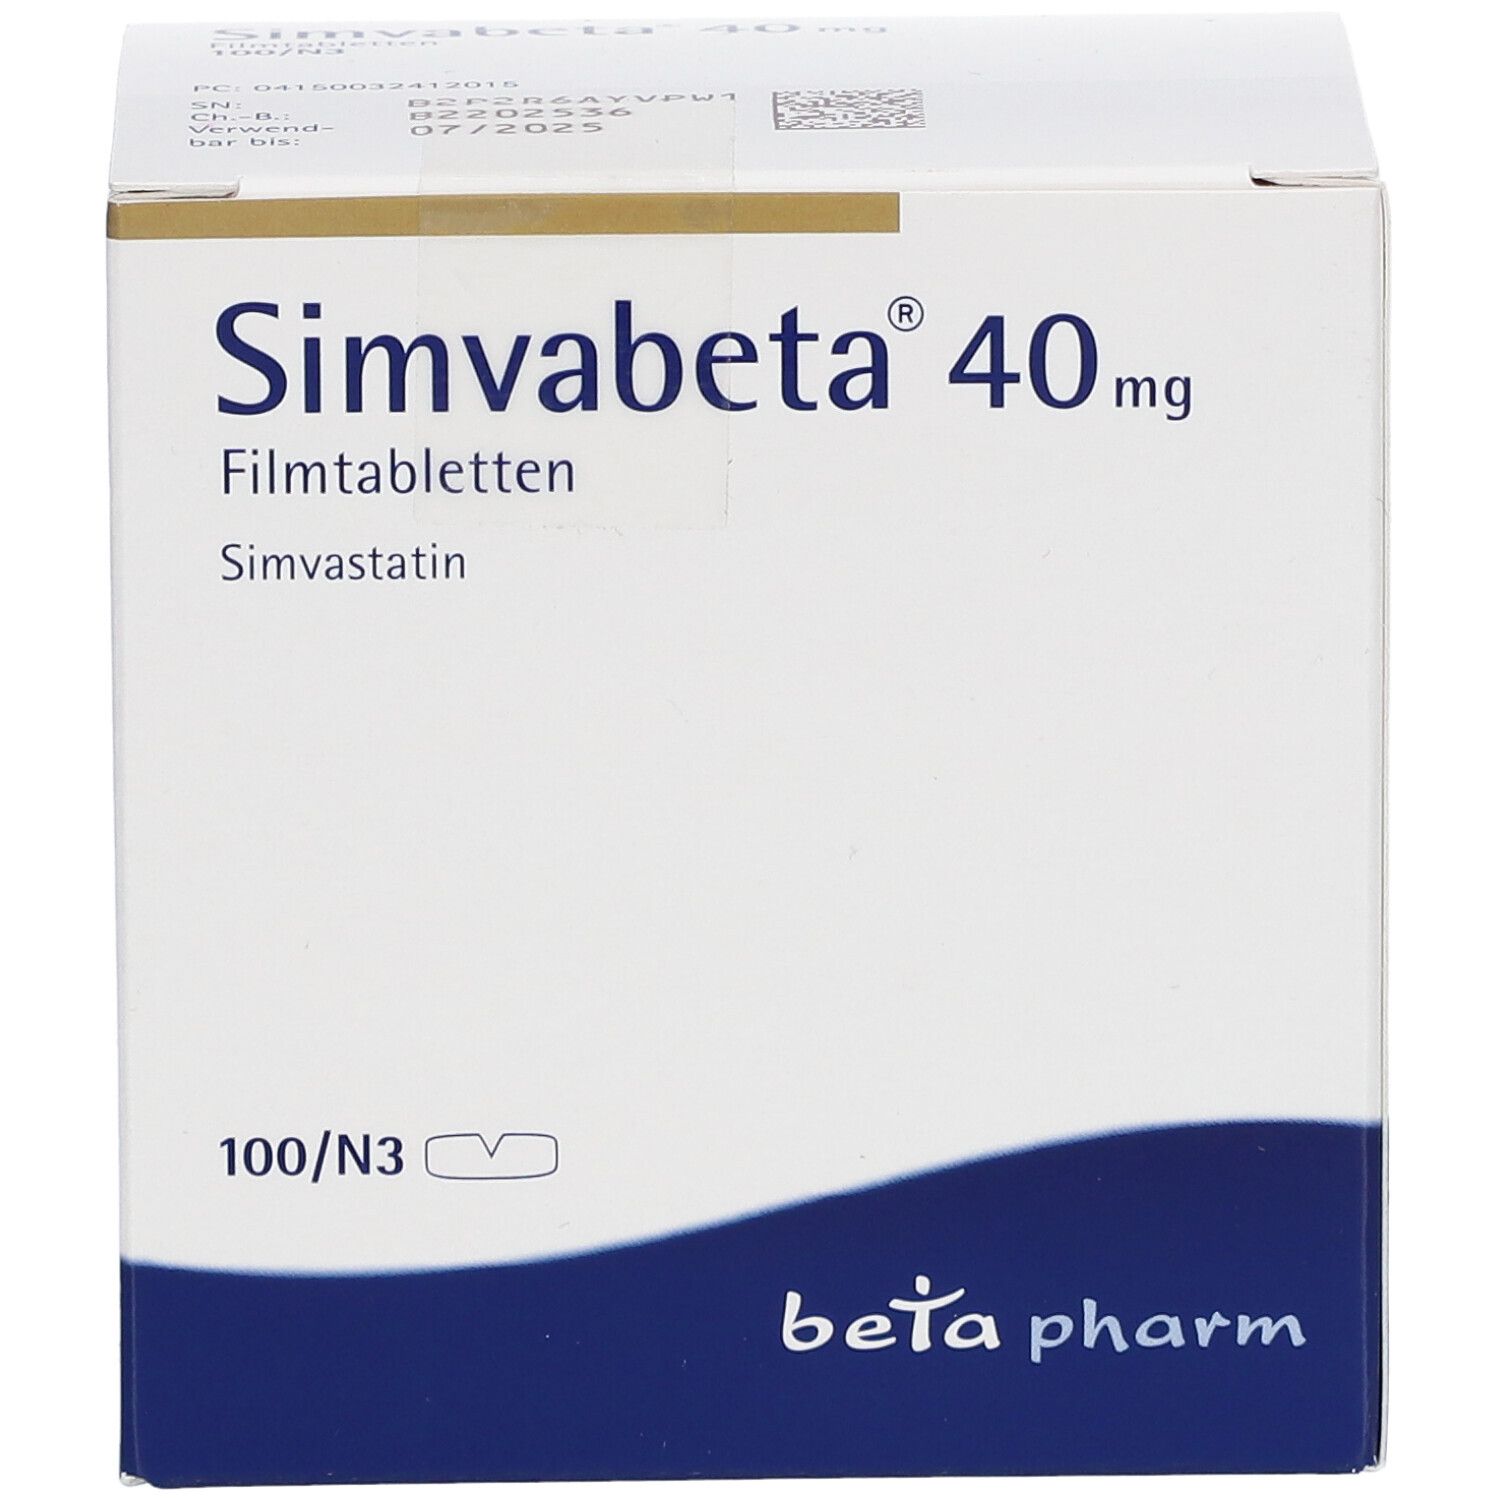 Simvabeta® 40 mg